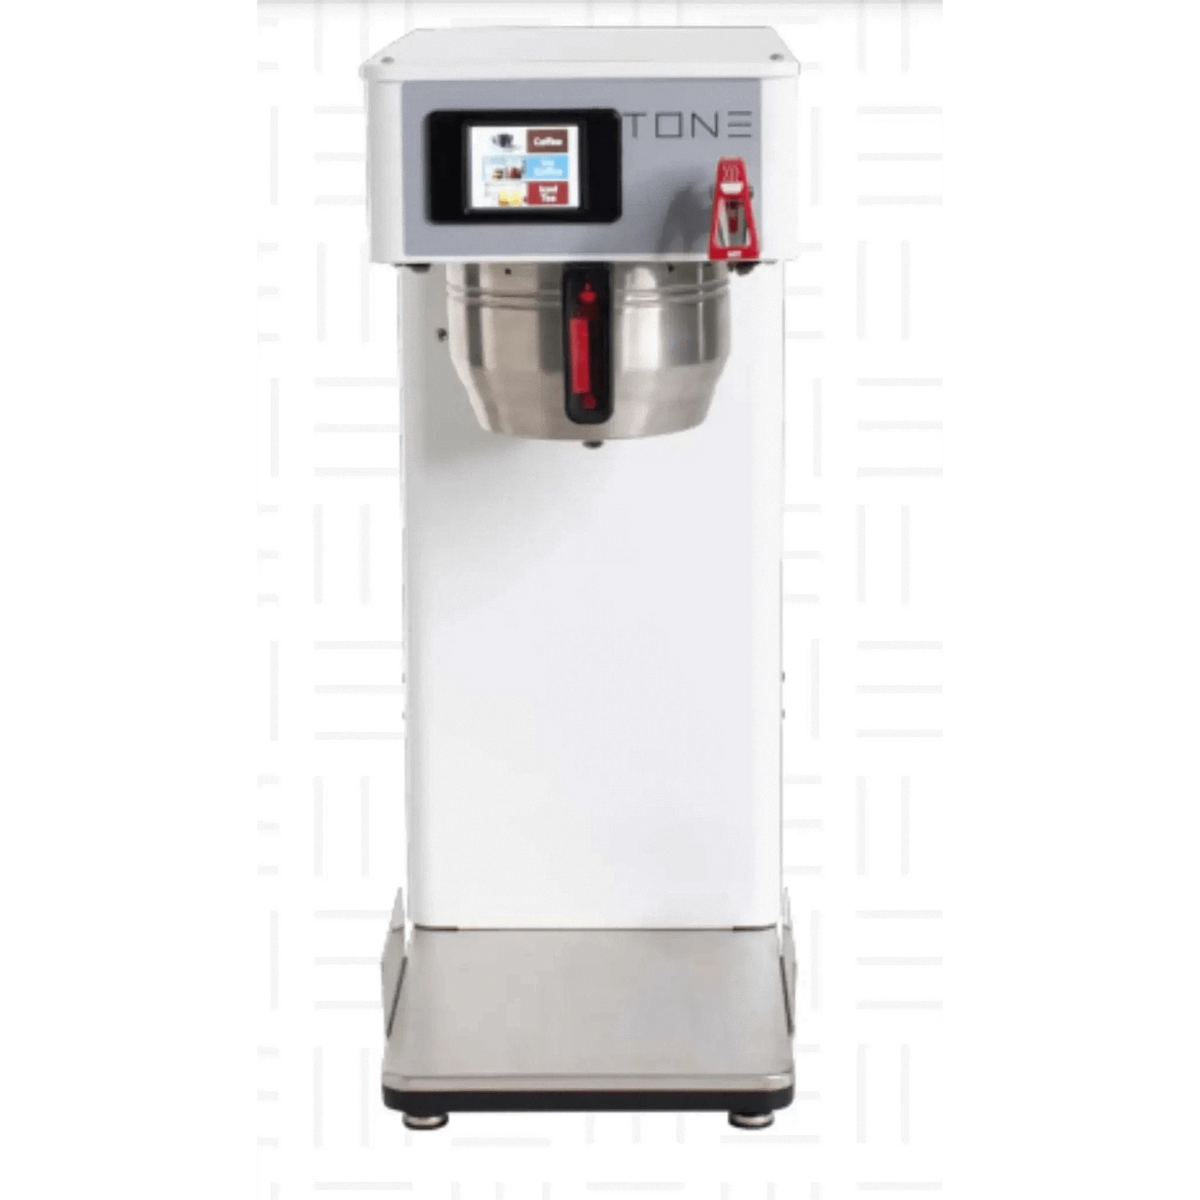 Bistro Touch Large Capacity  Newco Liquid Coffee Machine